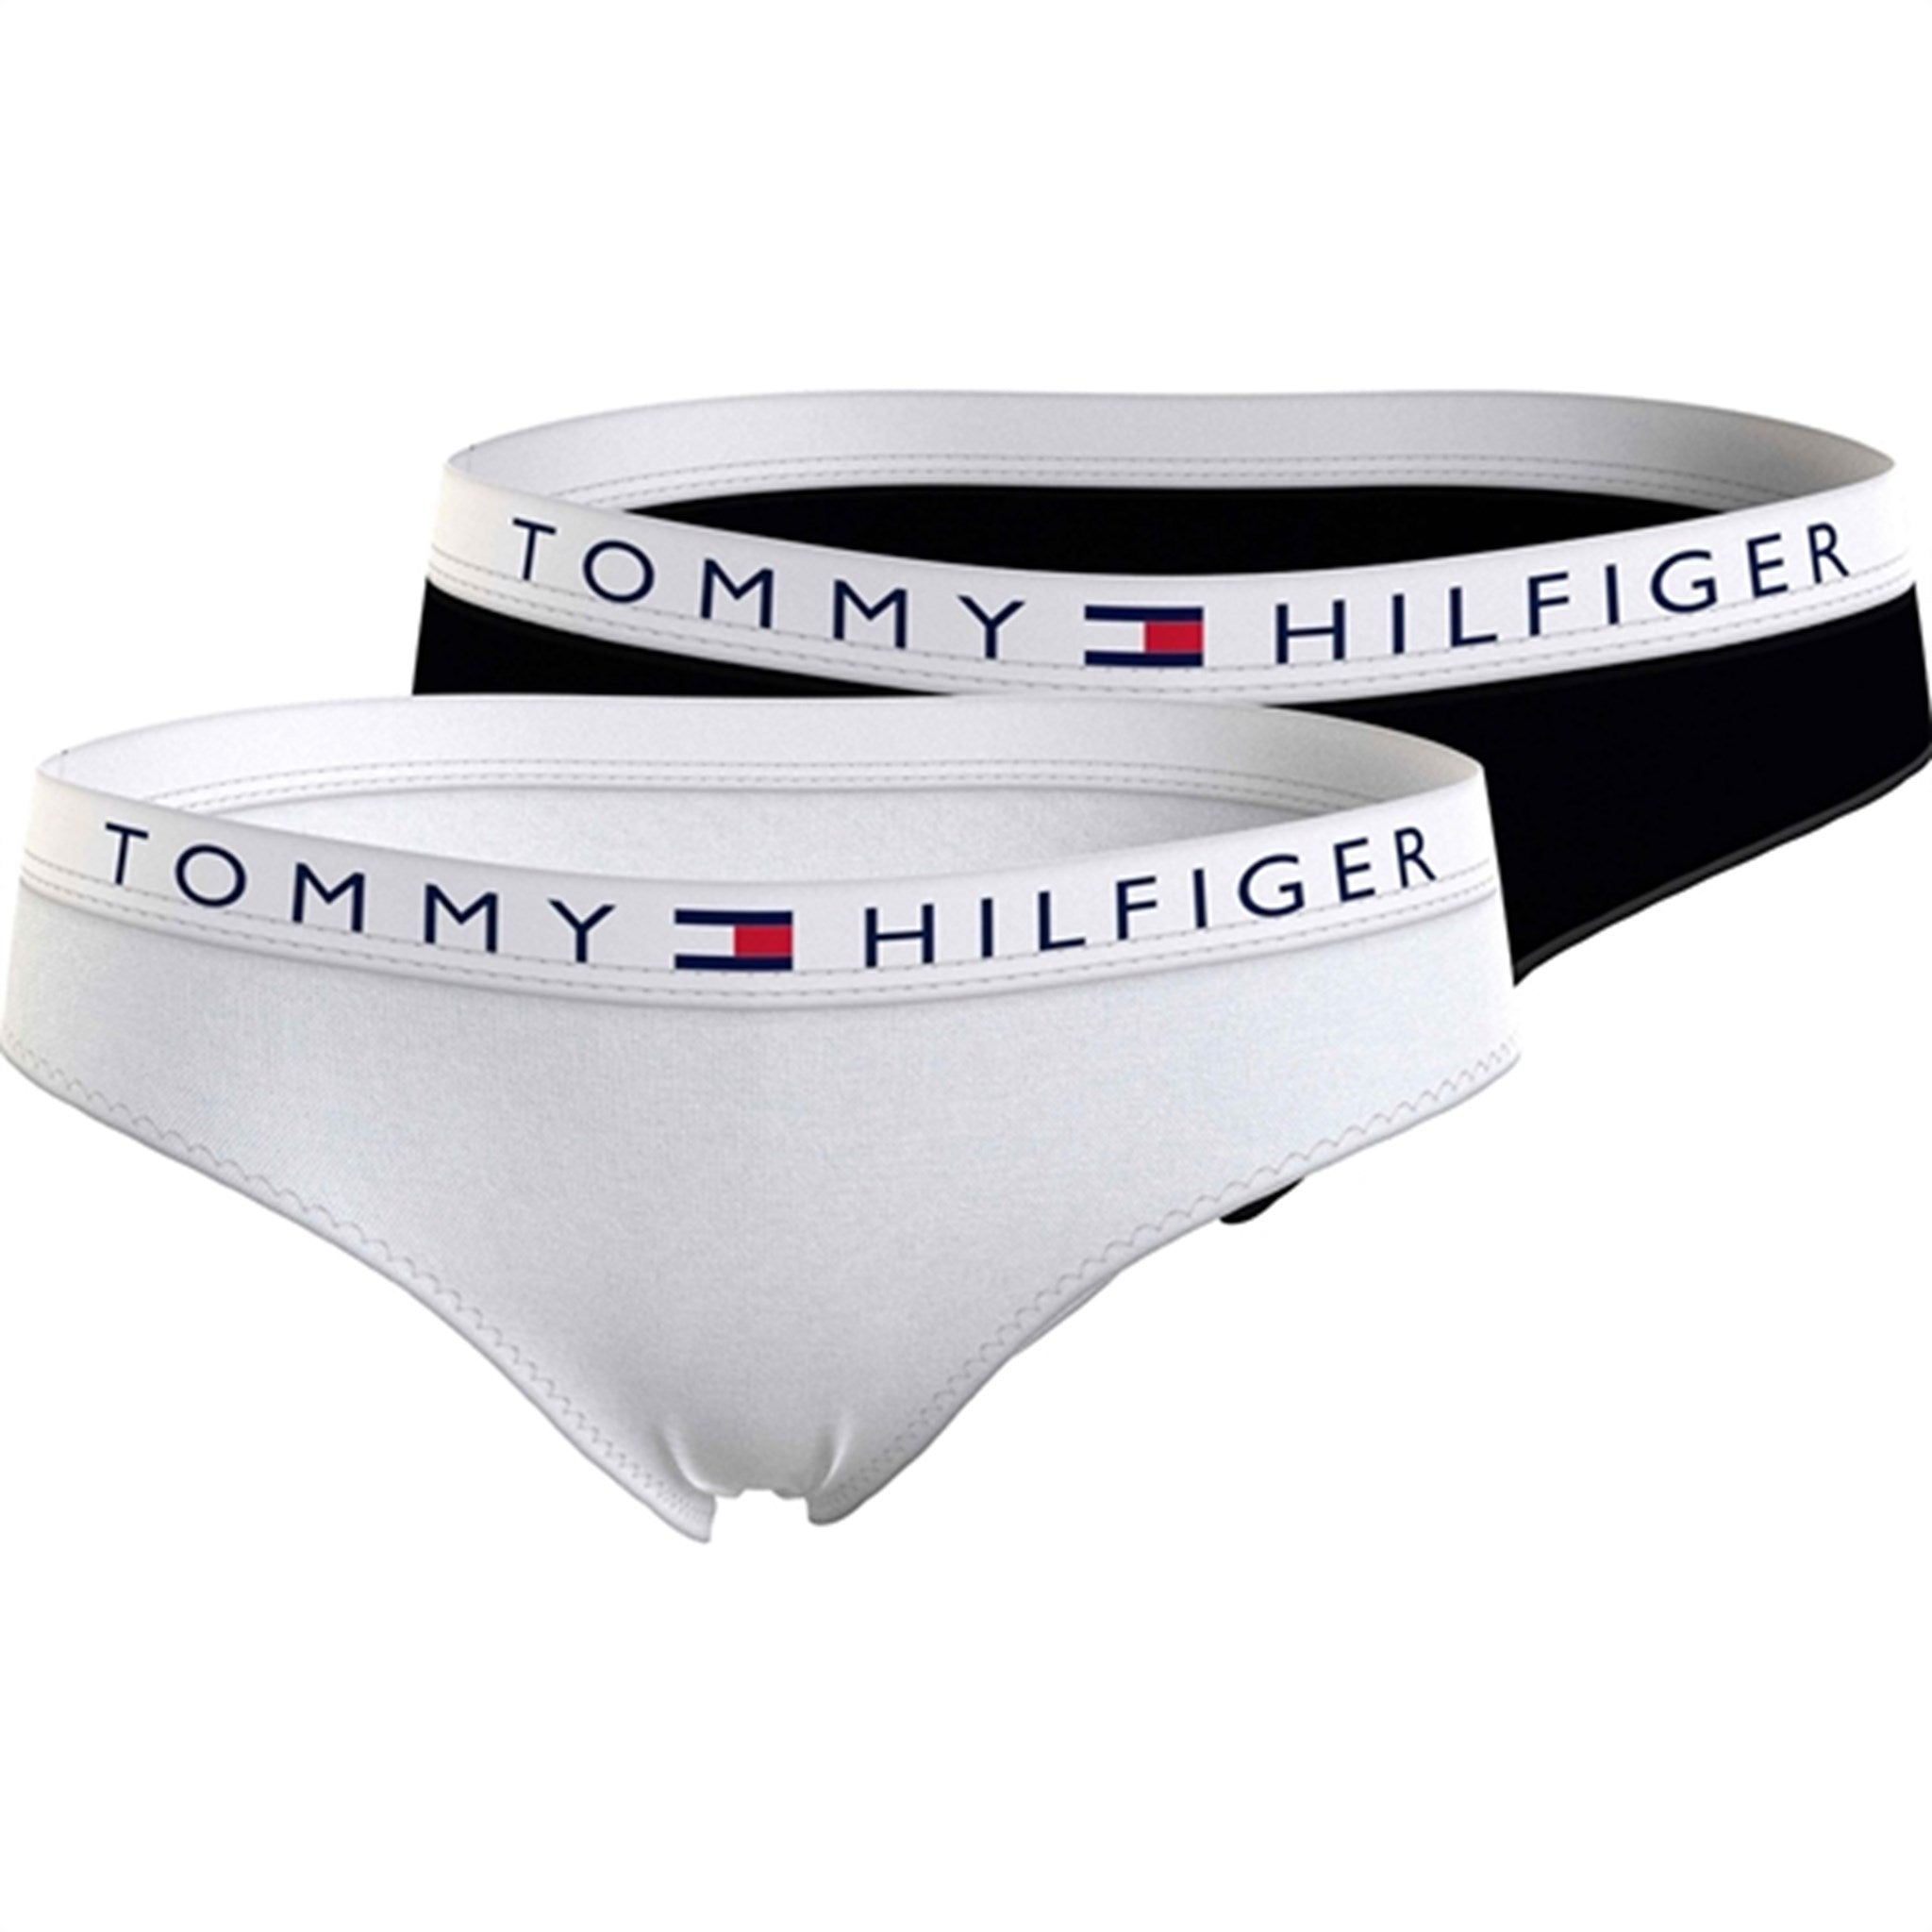 Tommy Hilfiger Brefs 2-Pack White / Black